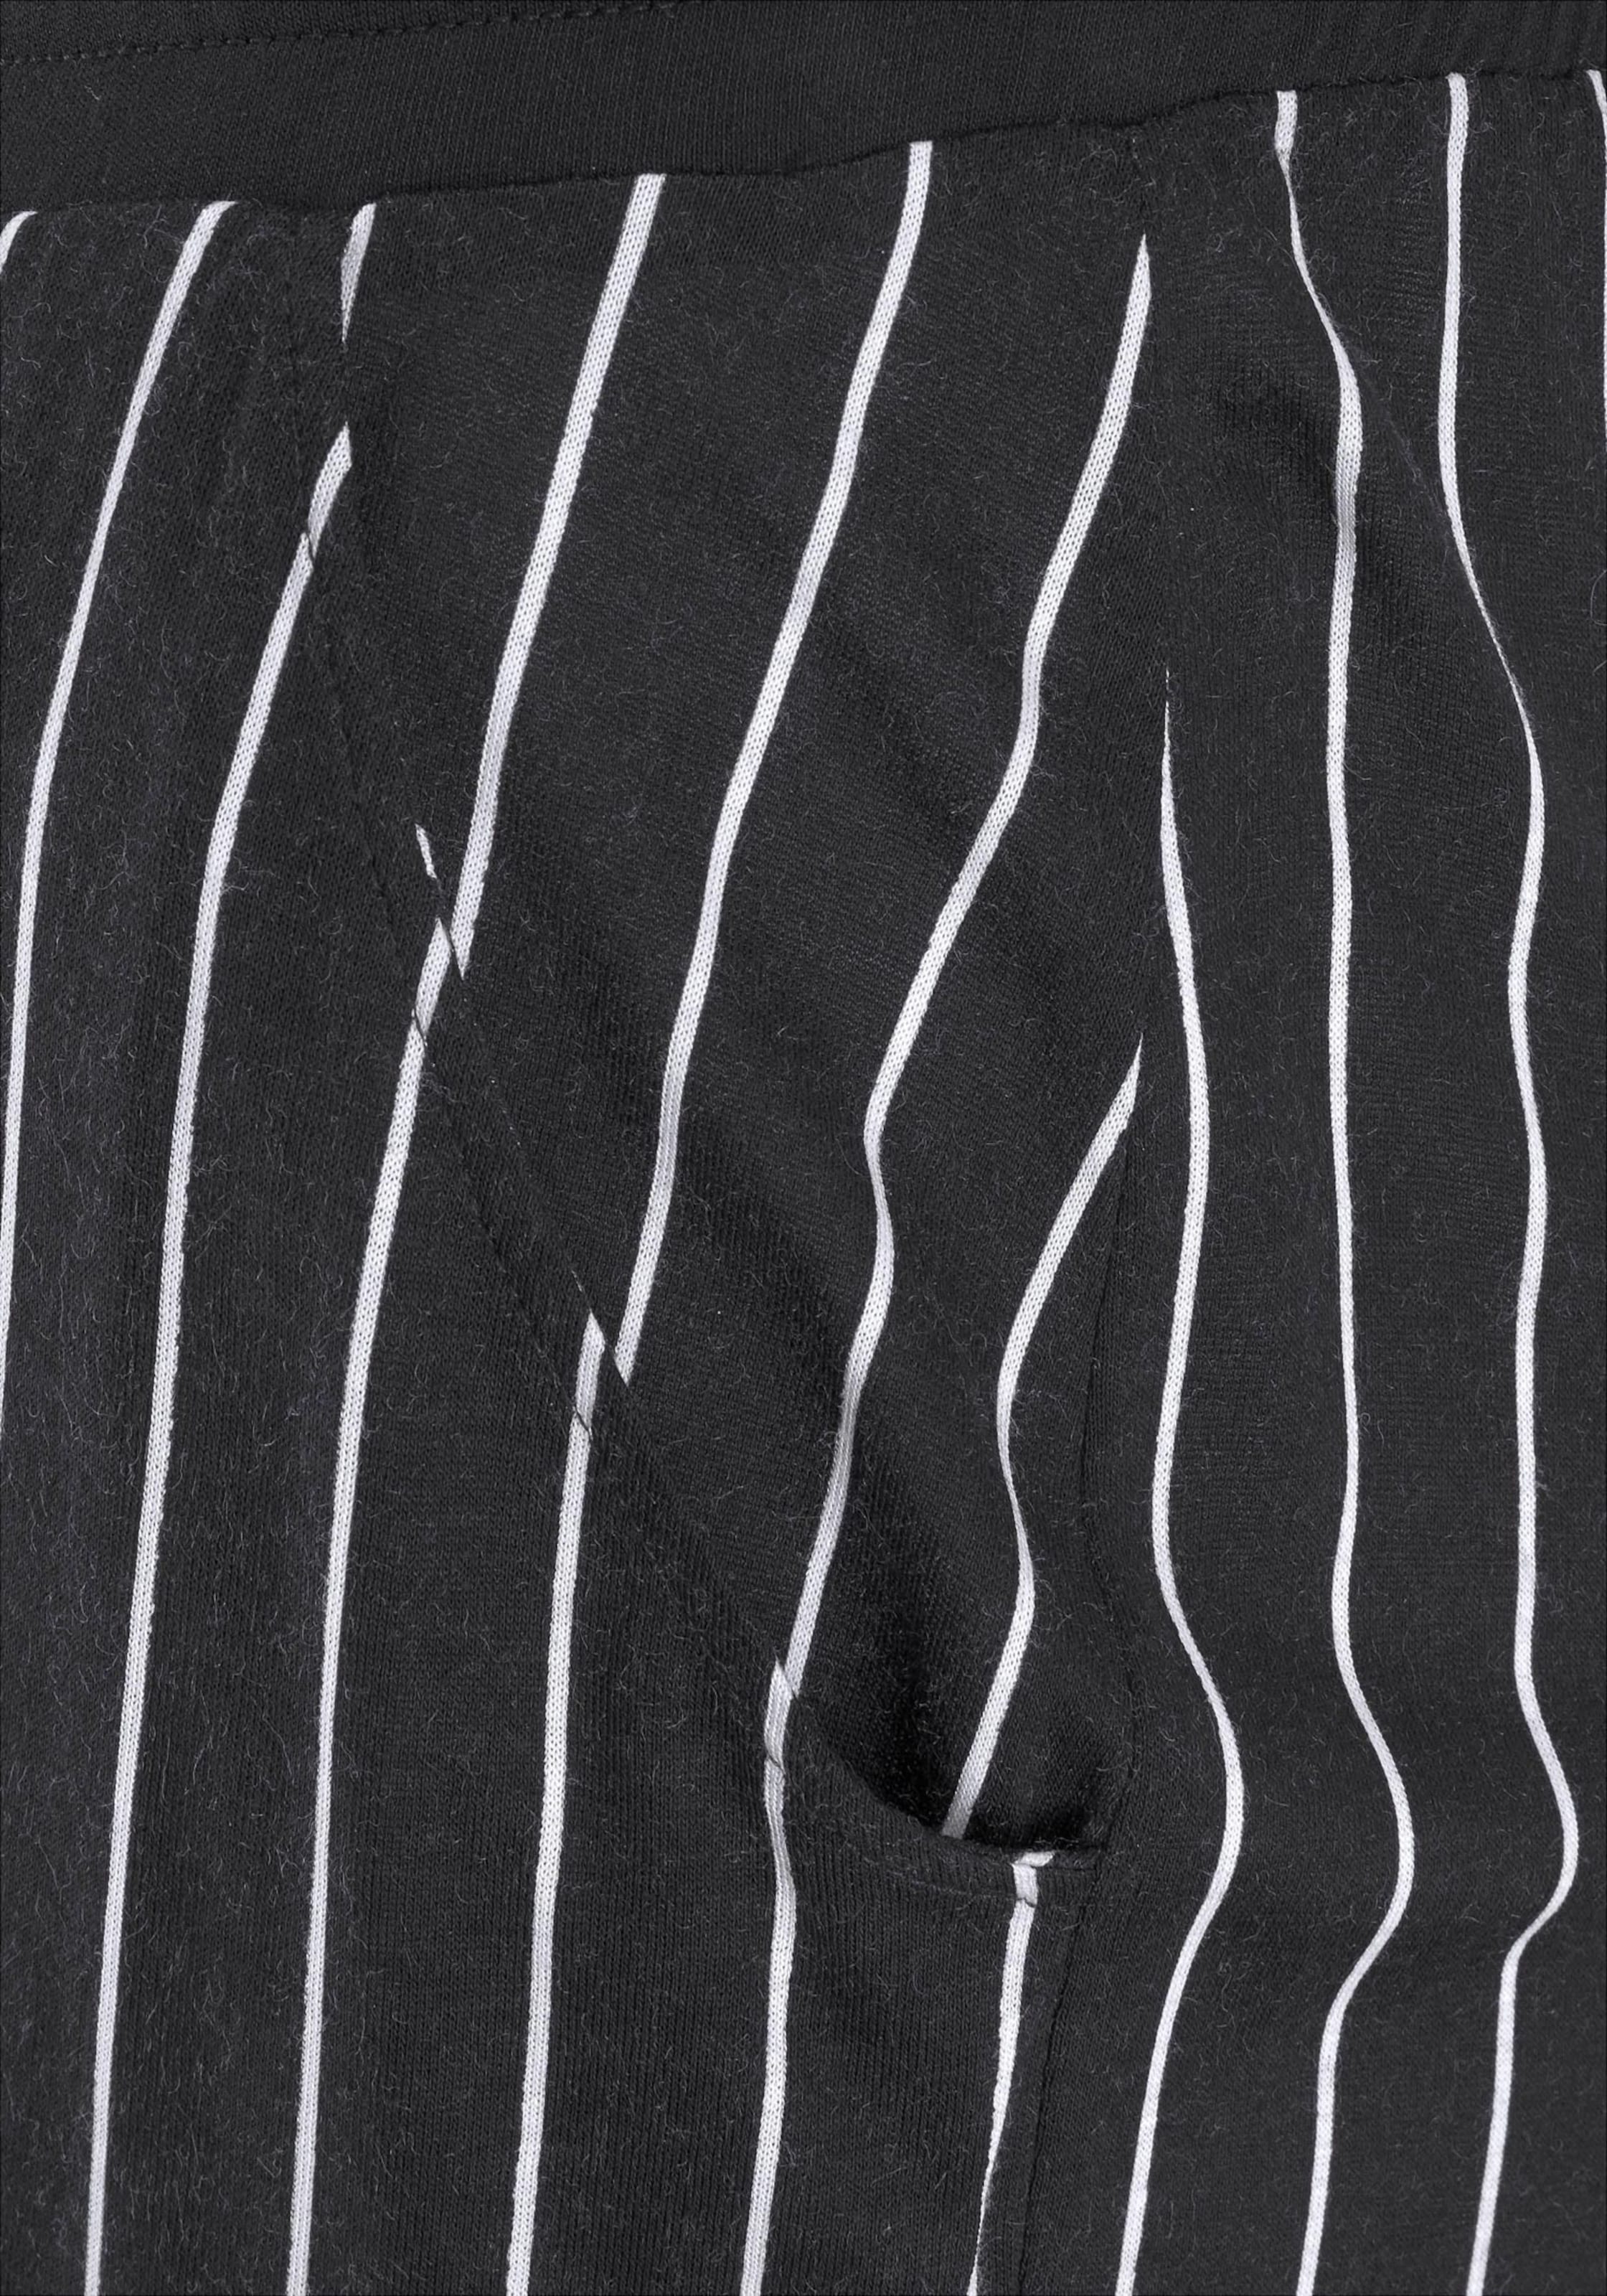 Bademode Strandmode Buffalo Strandhose in schwarz-weiß-gestreift 